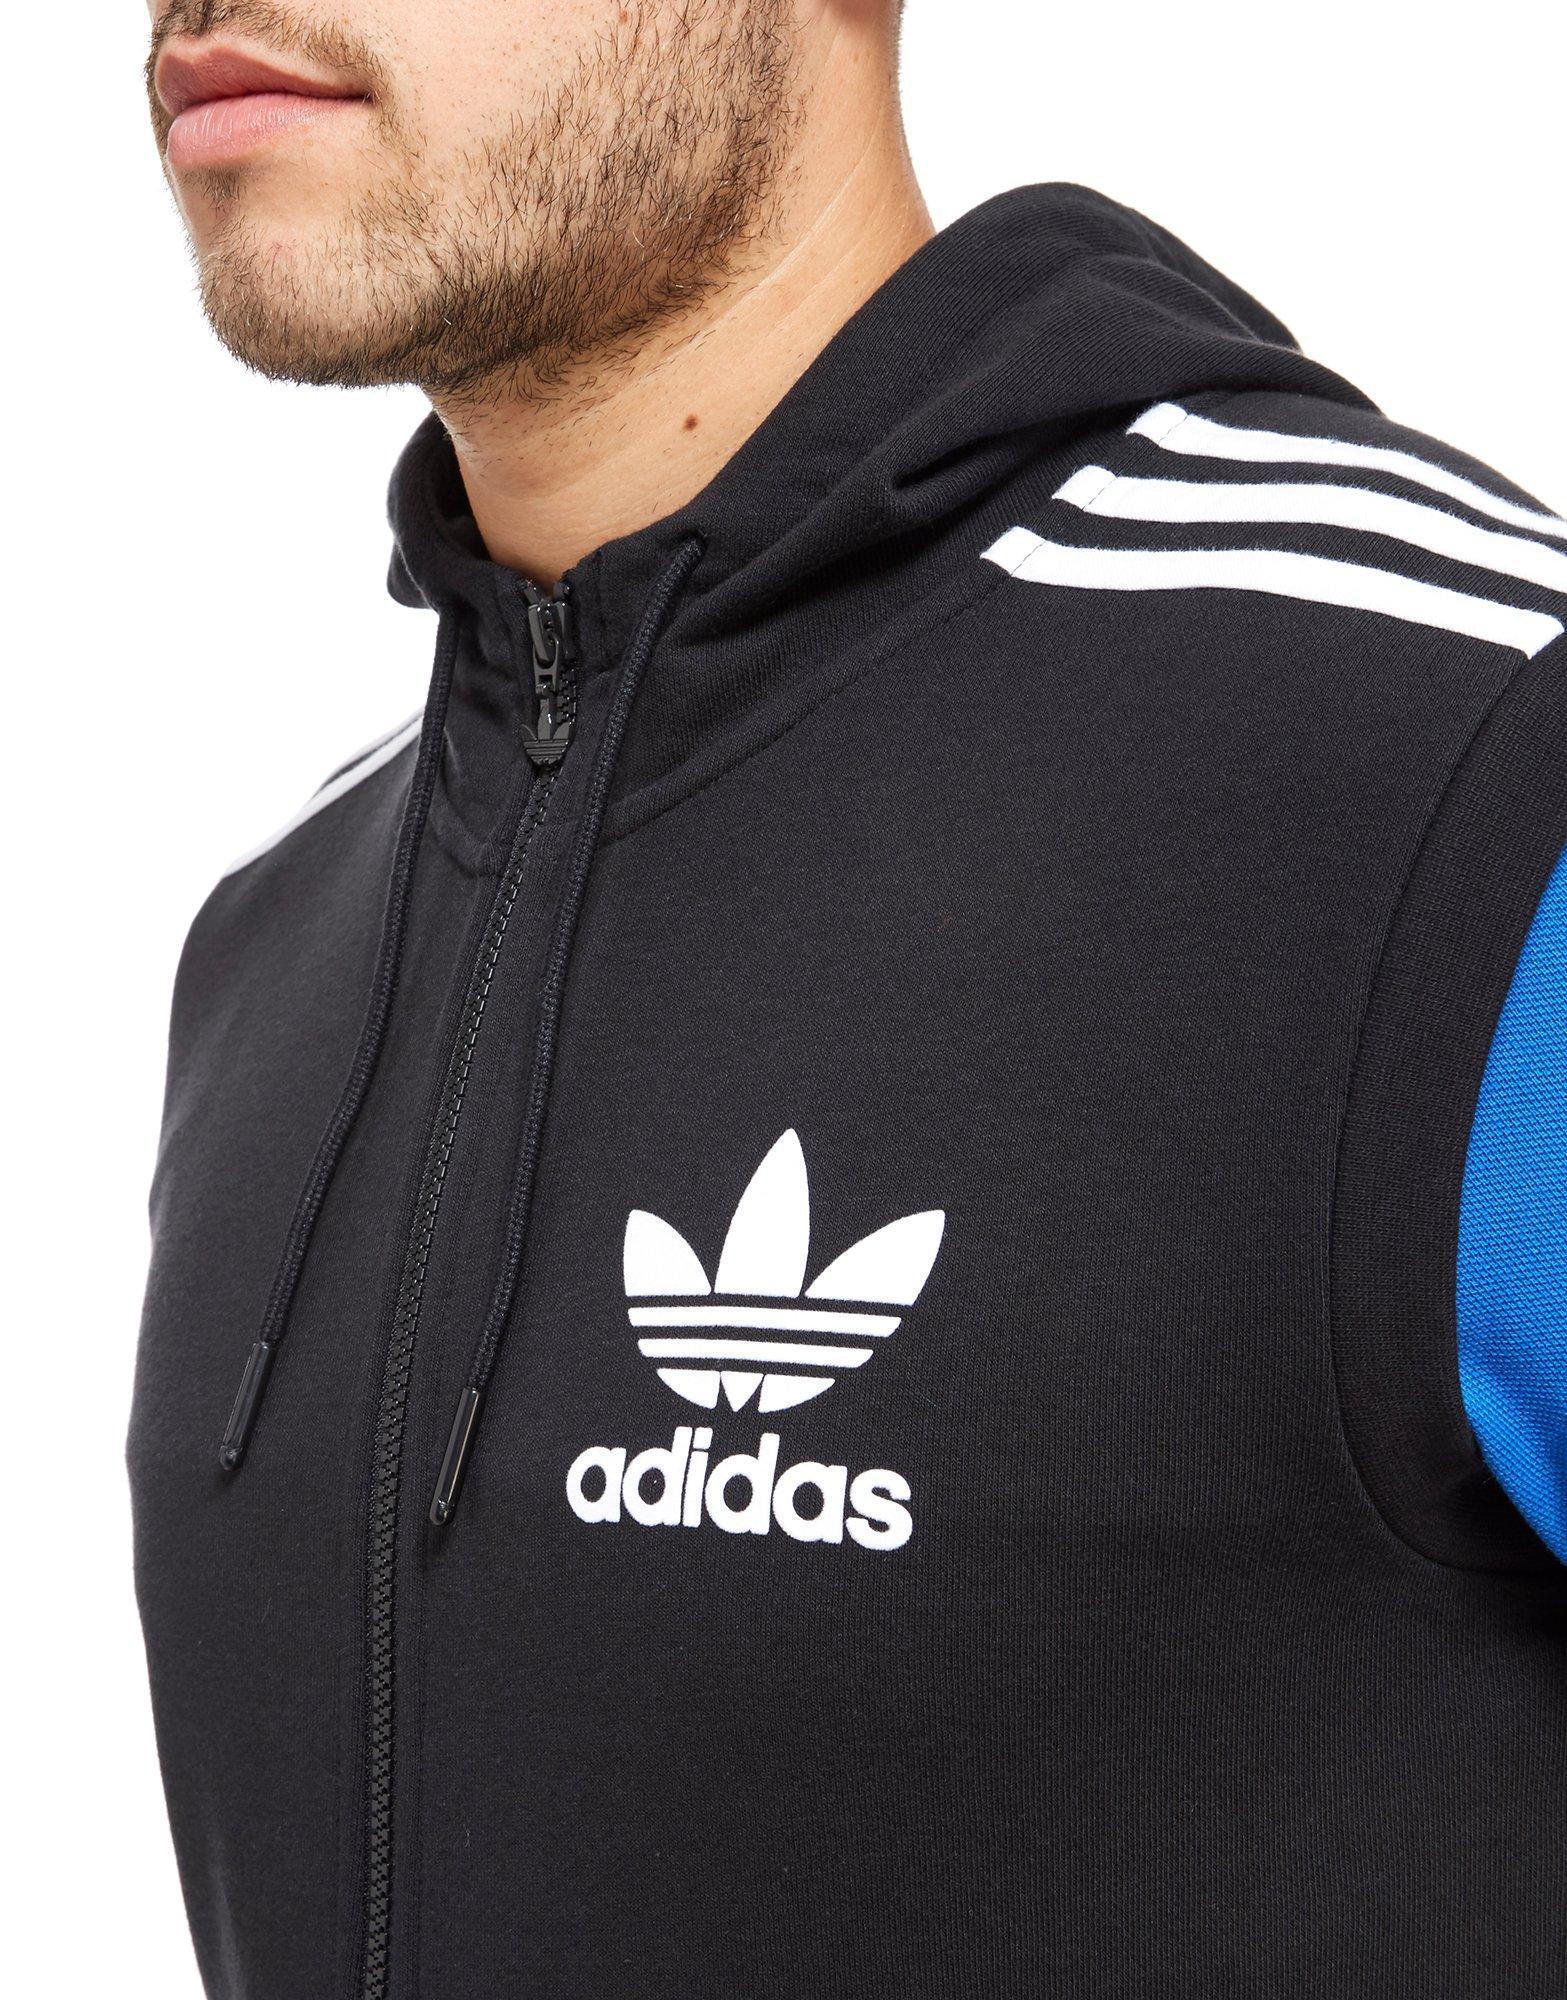 adidas sleeveless zip up hoodie